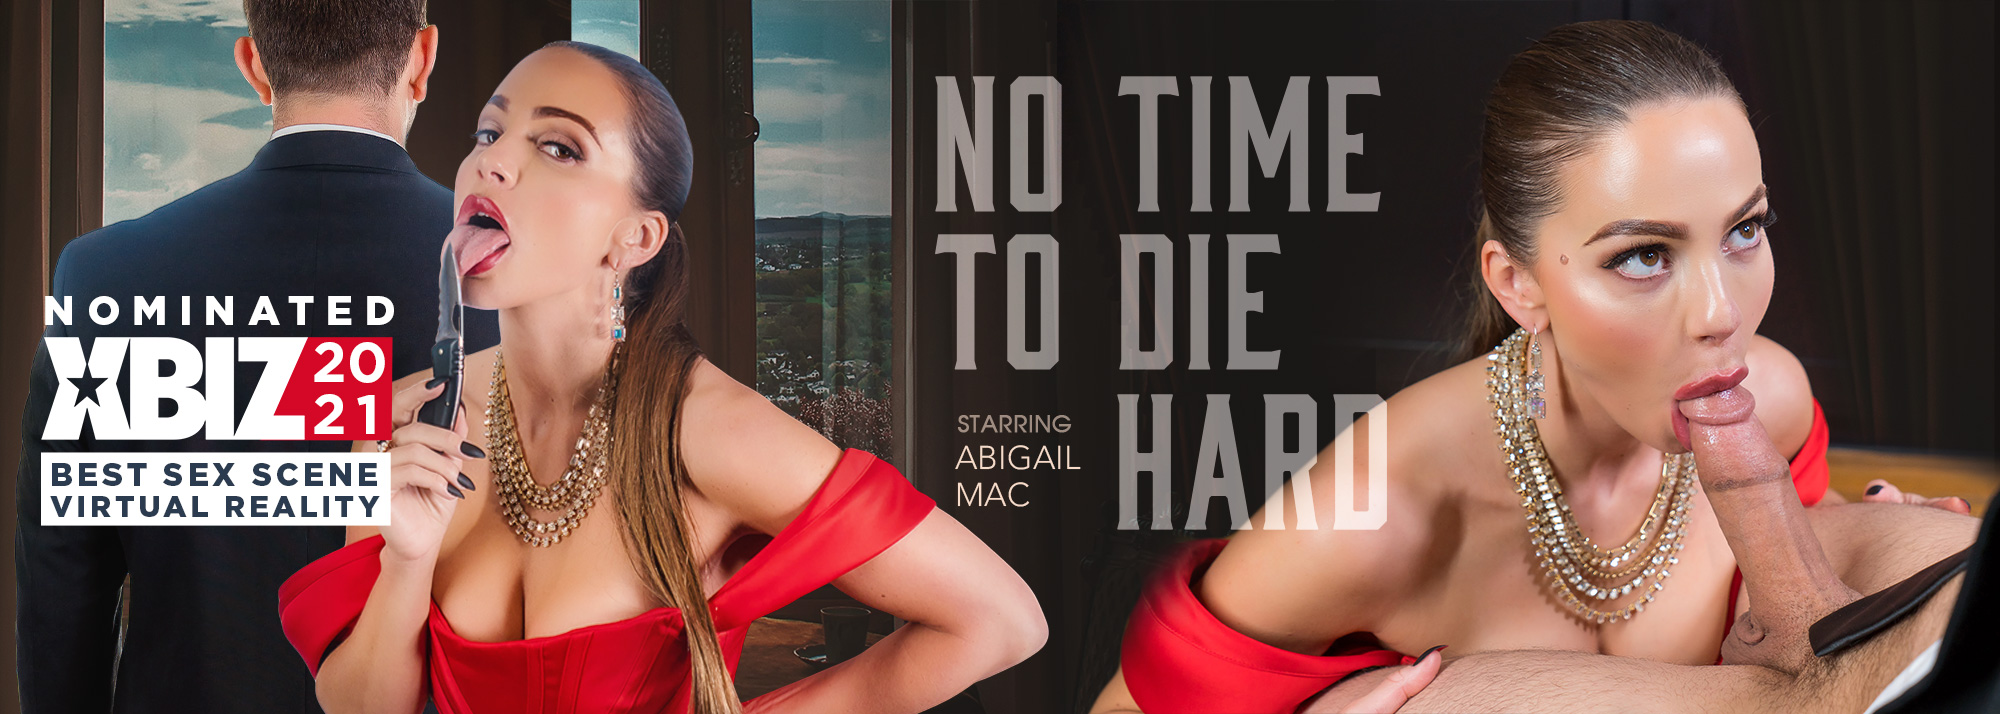 No Time to Die Hard - VR Porn Video, Starring: Abigail Mac